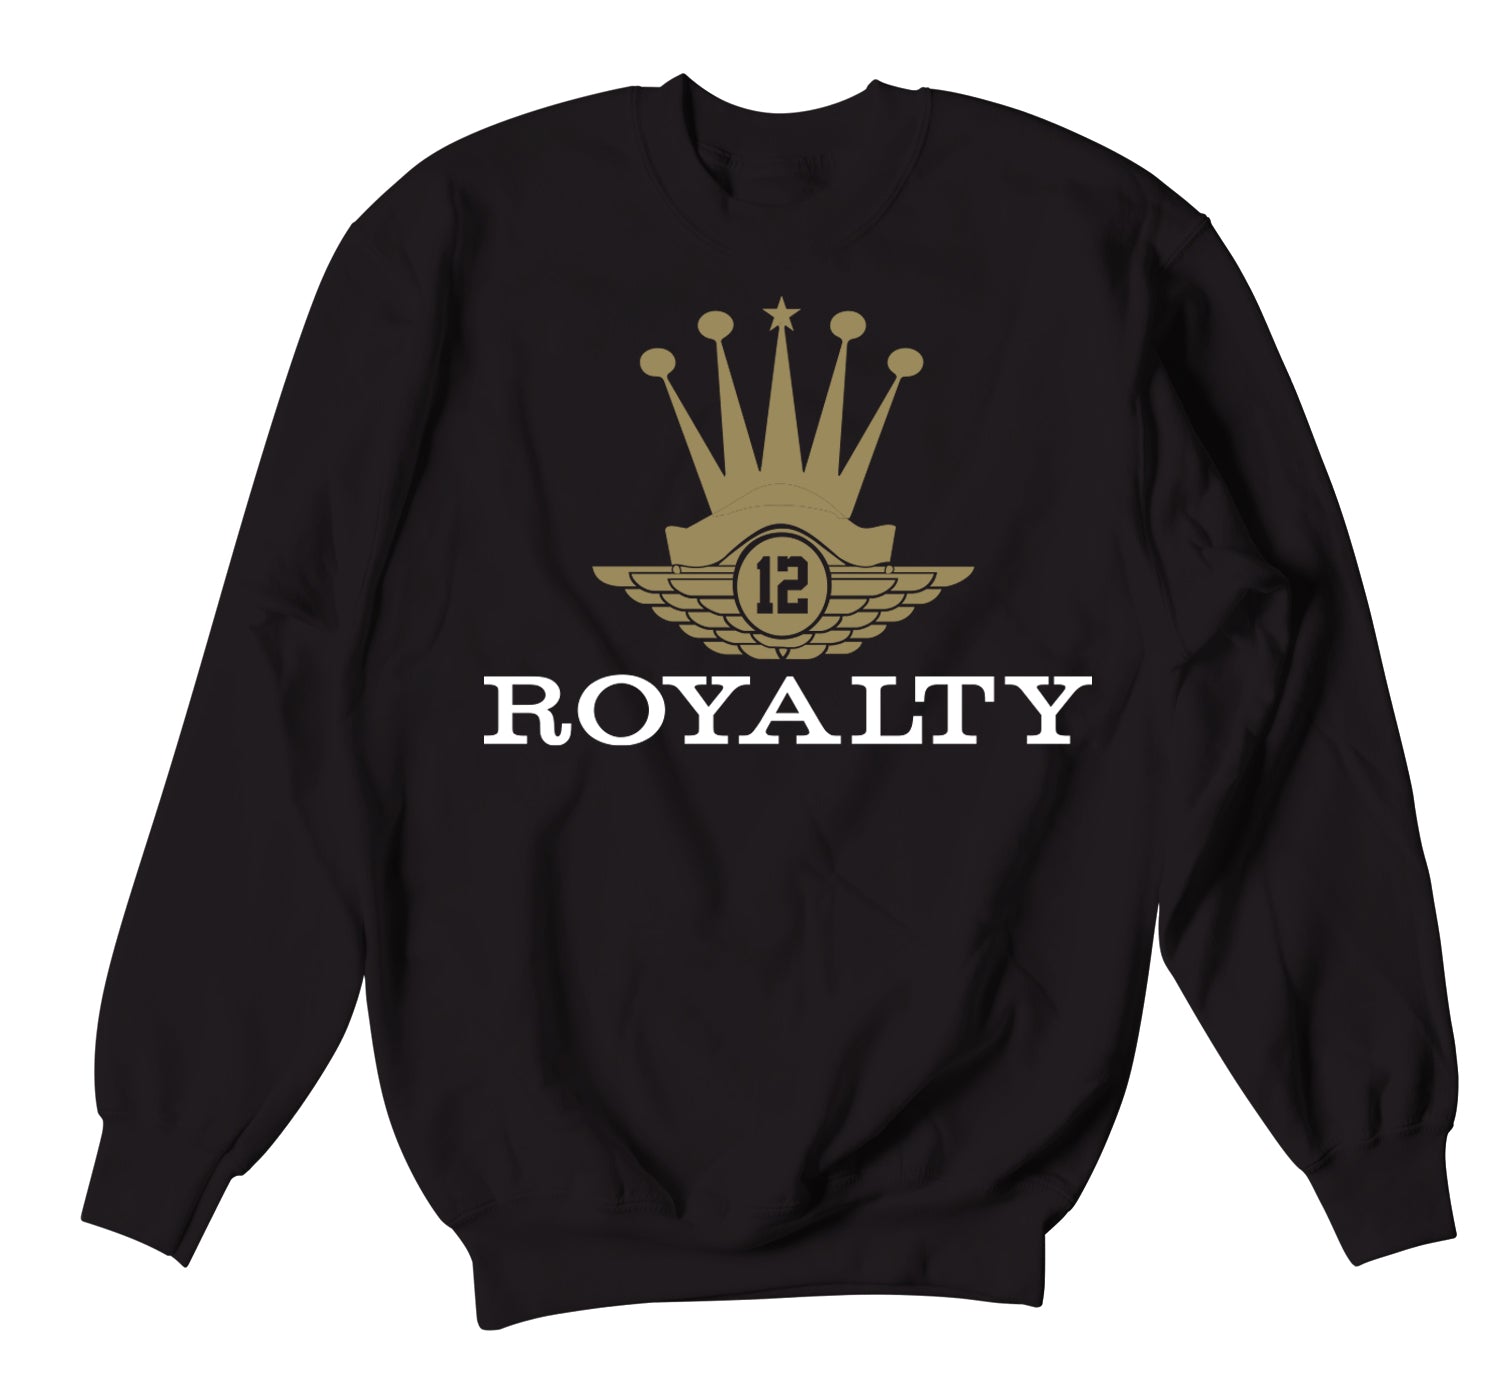 Retro 12 Royalty Sweater - Royalty - Black